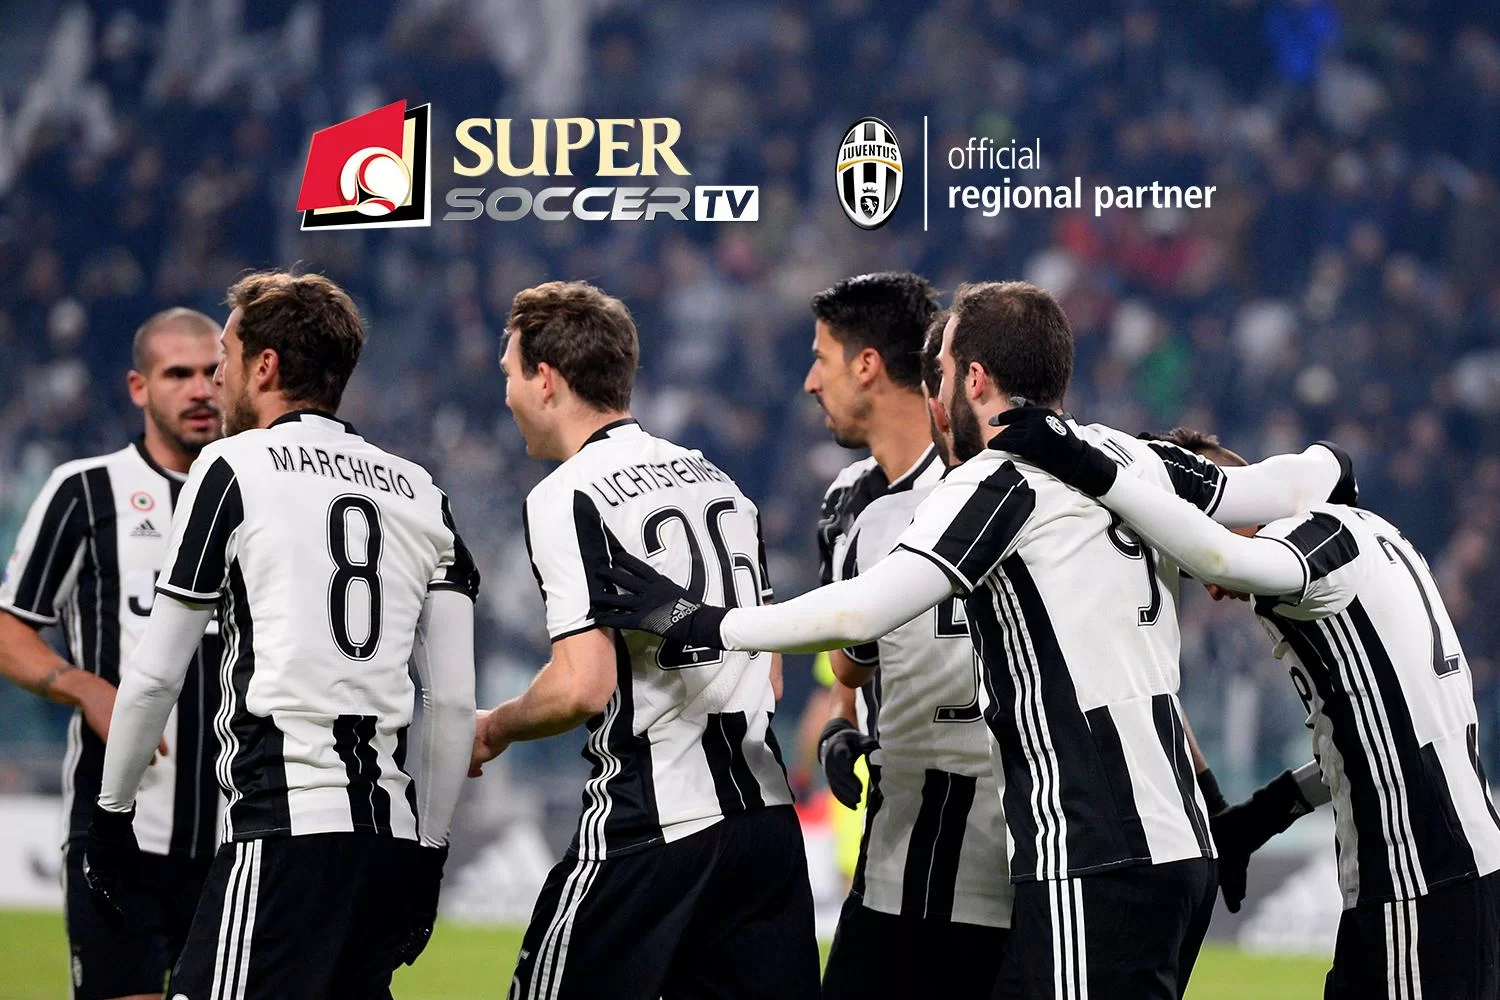 Nuova partnership per i bianconeri: Juventus e Super Soccer insieme in Indonesia